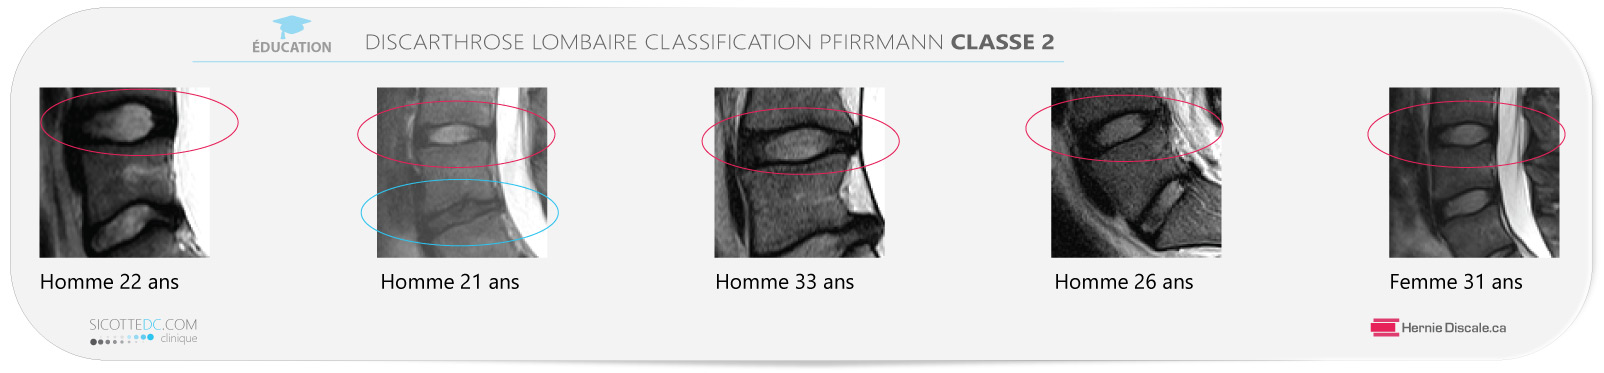 Example discarthrose lombaire classification Pfirrmann classe 2